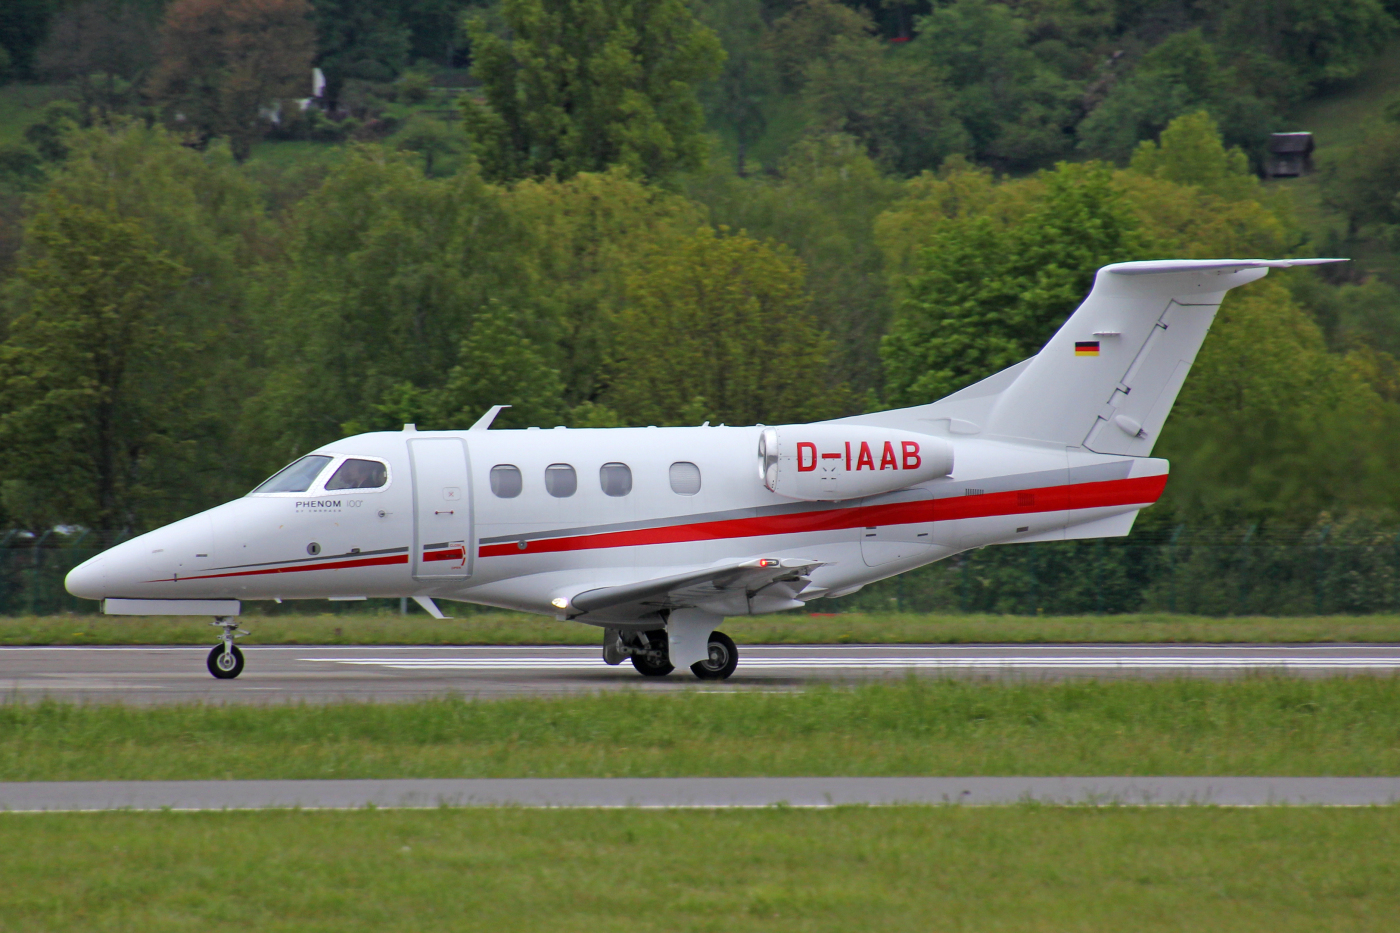 Phenom 100 - D-IAAB - Private Jet Charter Membership - jetmembership.com - Exterior